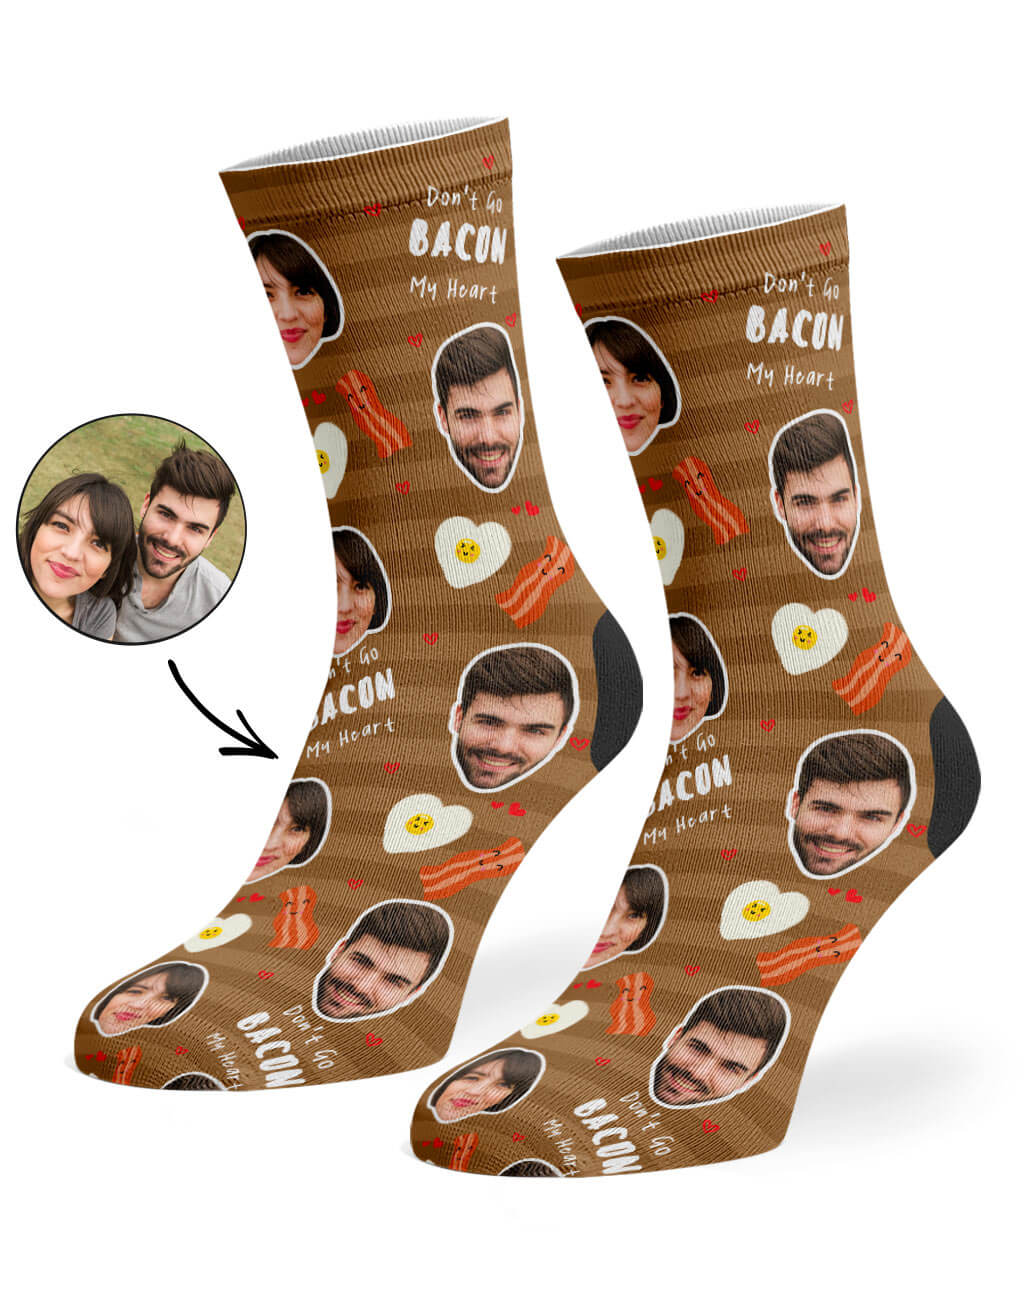 Don't Go Bacon My Heart Custom Socks